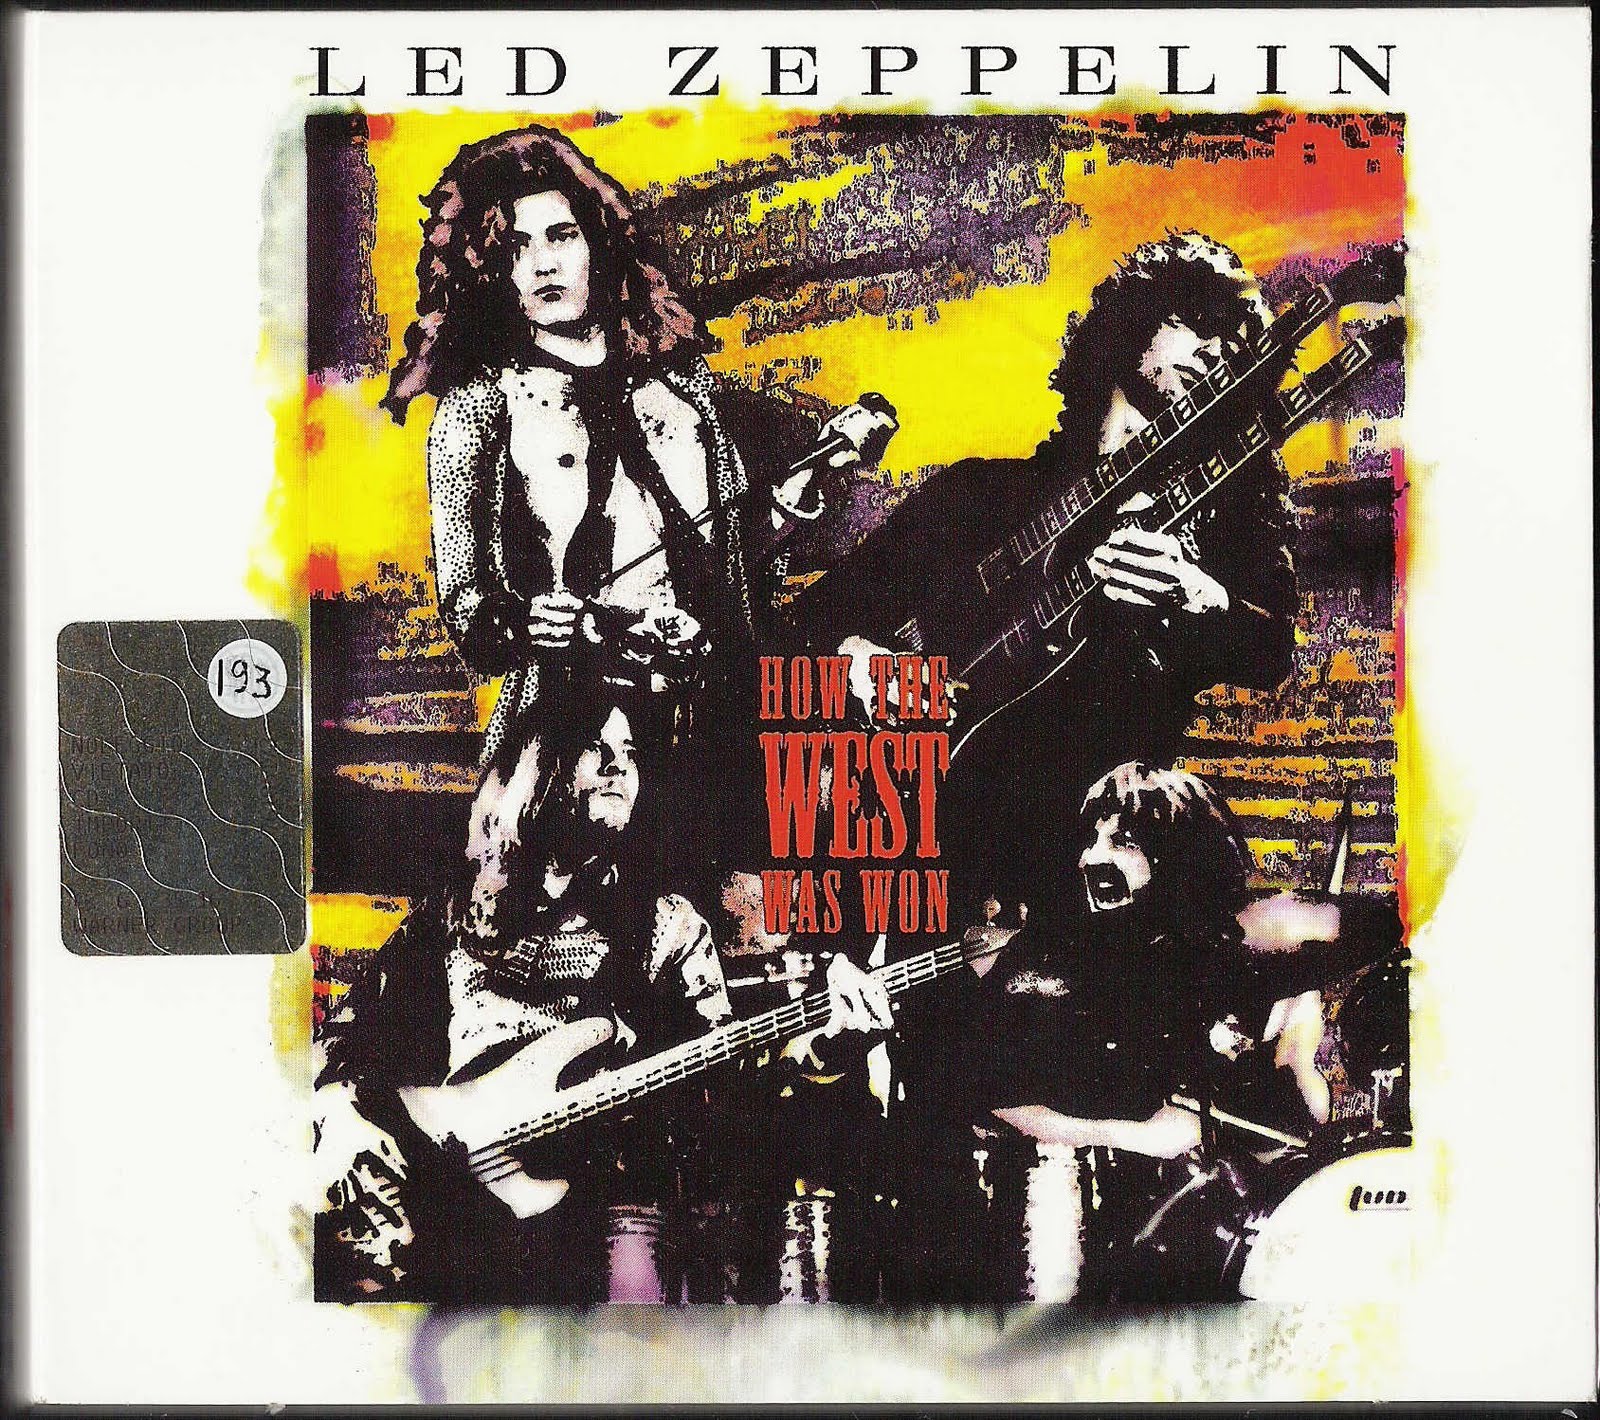 Early Days Latter Days: Vol 1 2 - Led Zeppelin